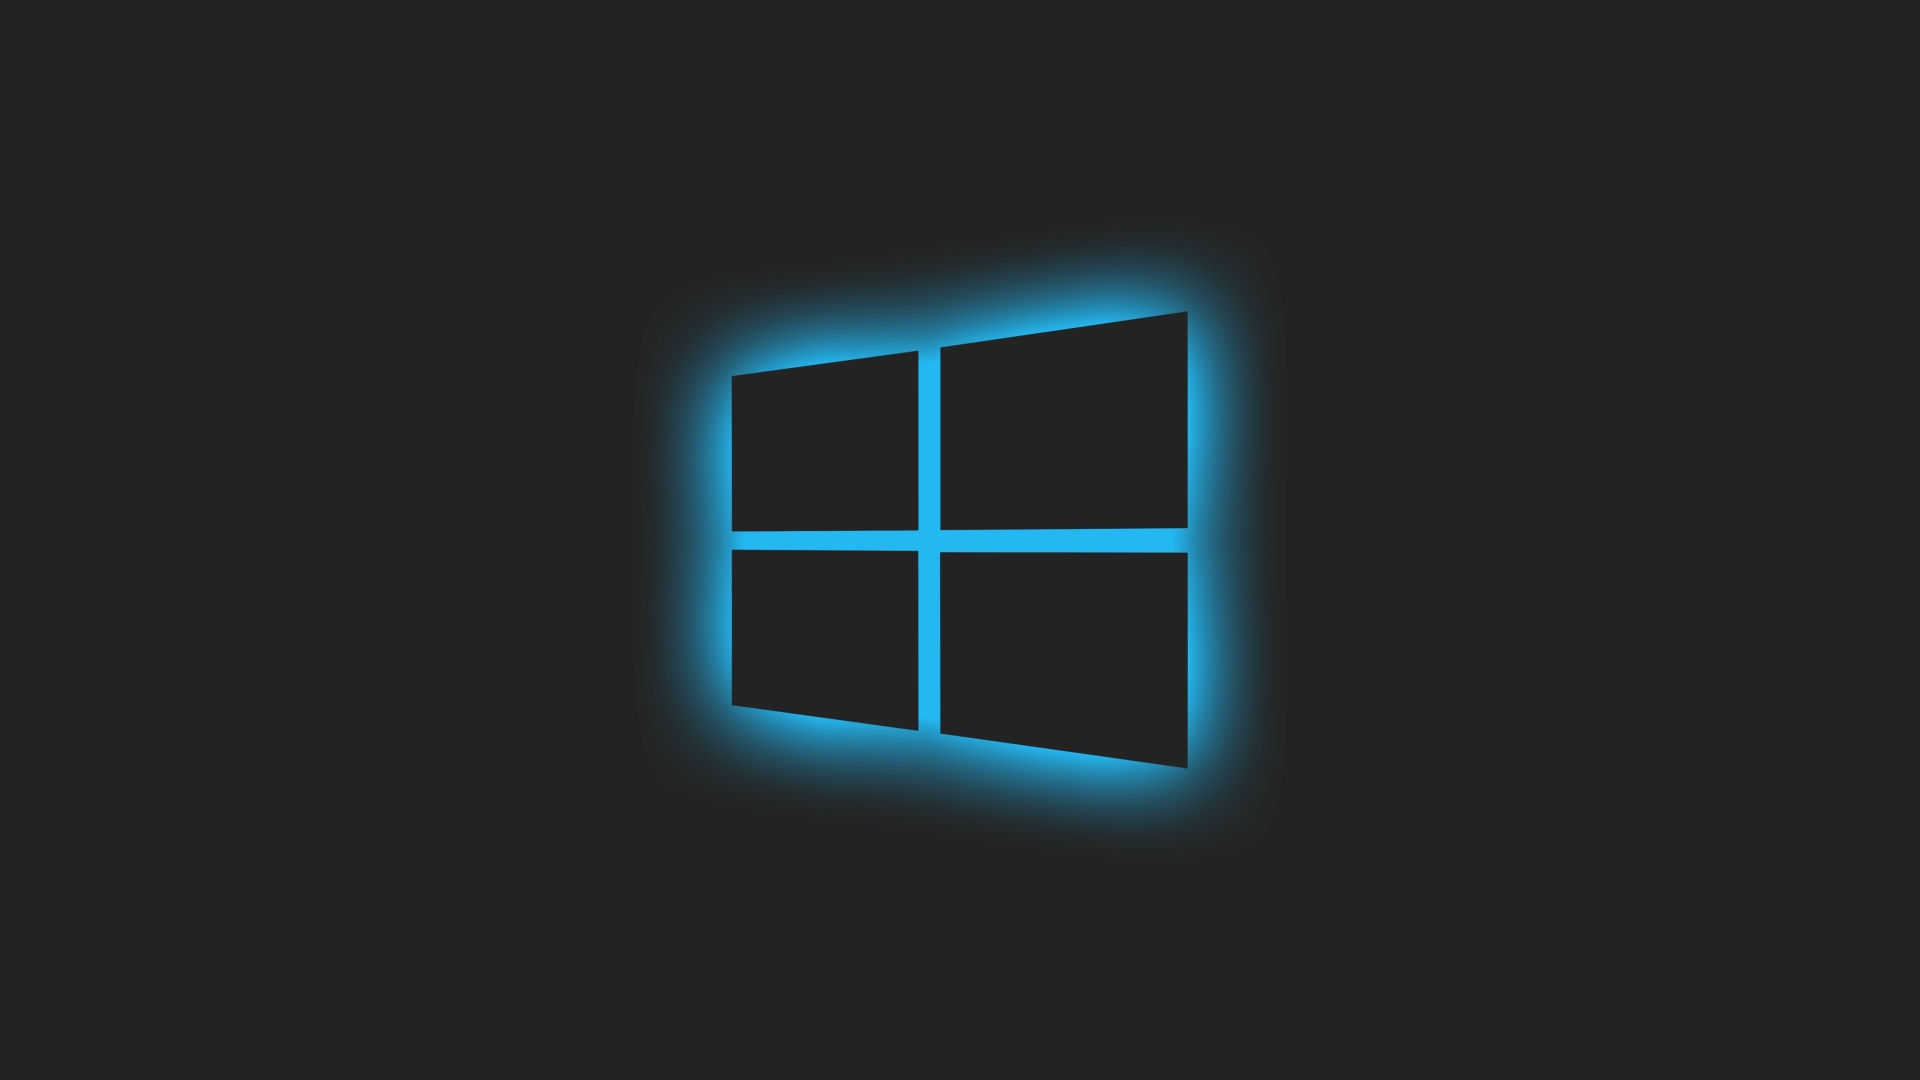 1920x1080 Windows 10 Logo Blue Glow 1080P Laptop Full HD Wallpaper, HD  Hi-Tech 4K Wallpapers, Images, Photos and Background - Wallpapers Den